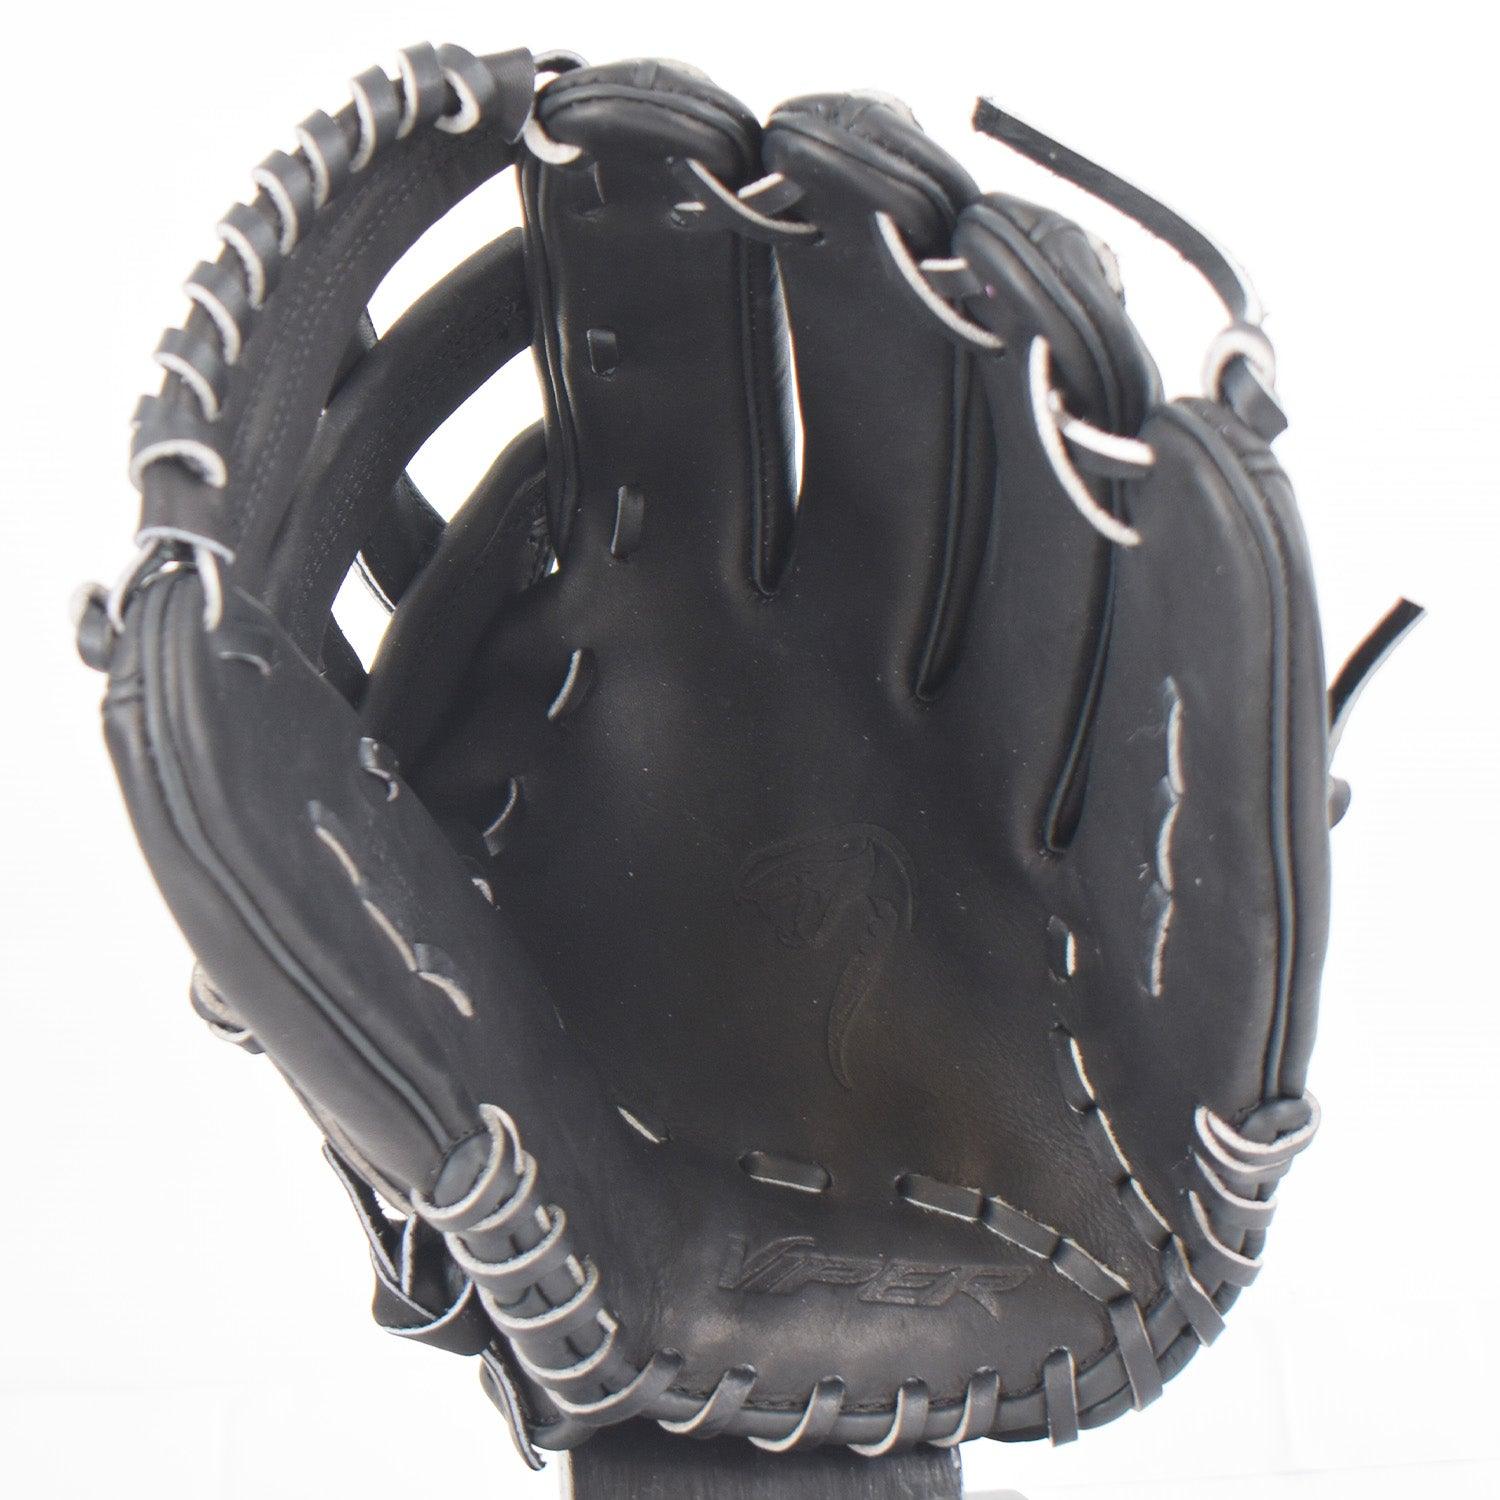 Viper Japanese Kip Leather Slowpitch Softball Fielding Glove Blackout - Smash It Sports